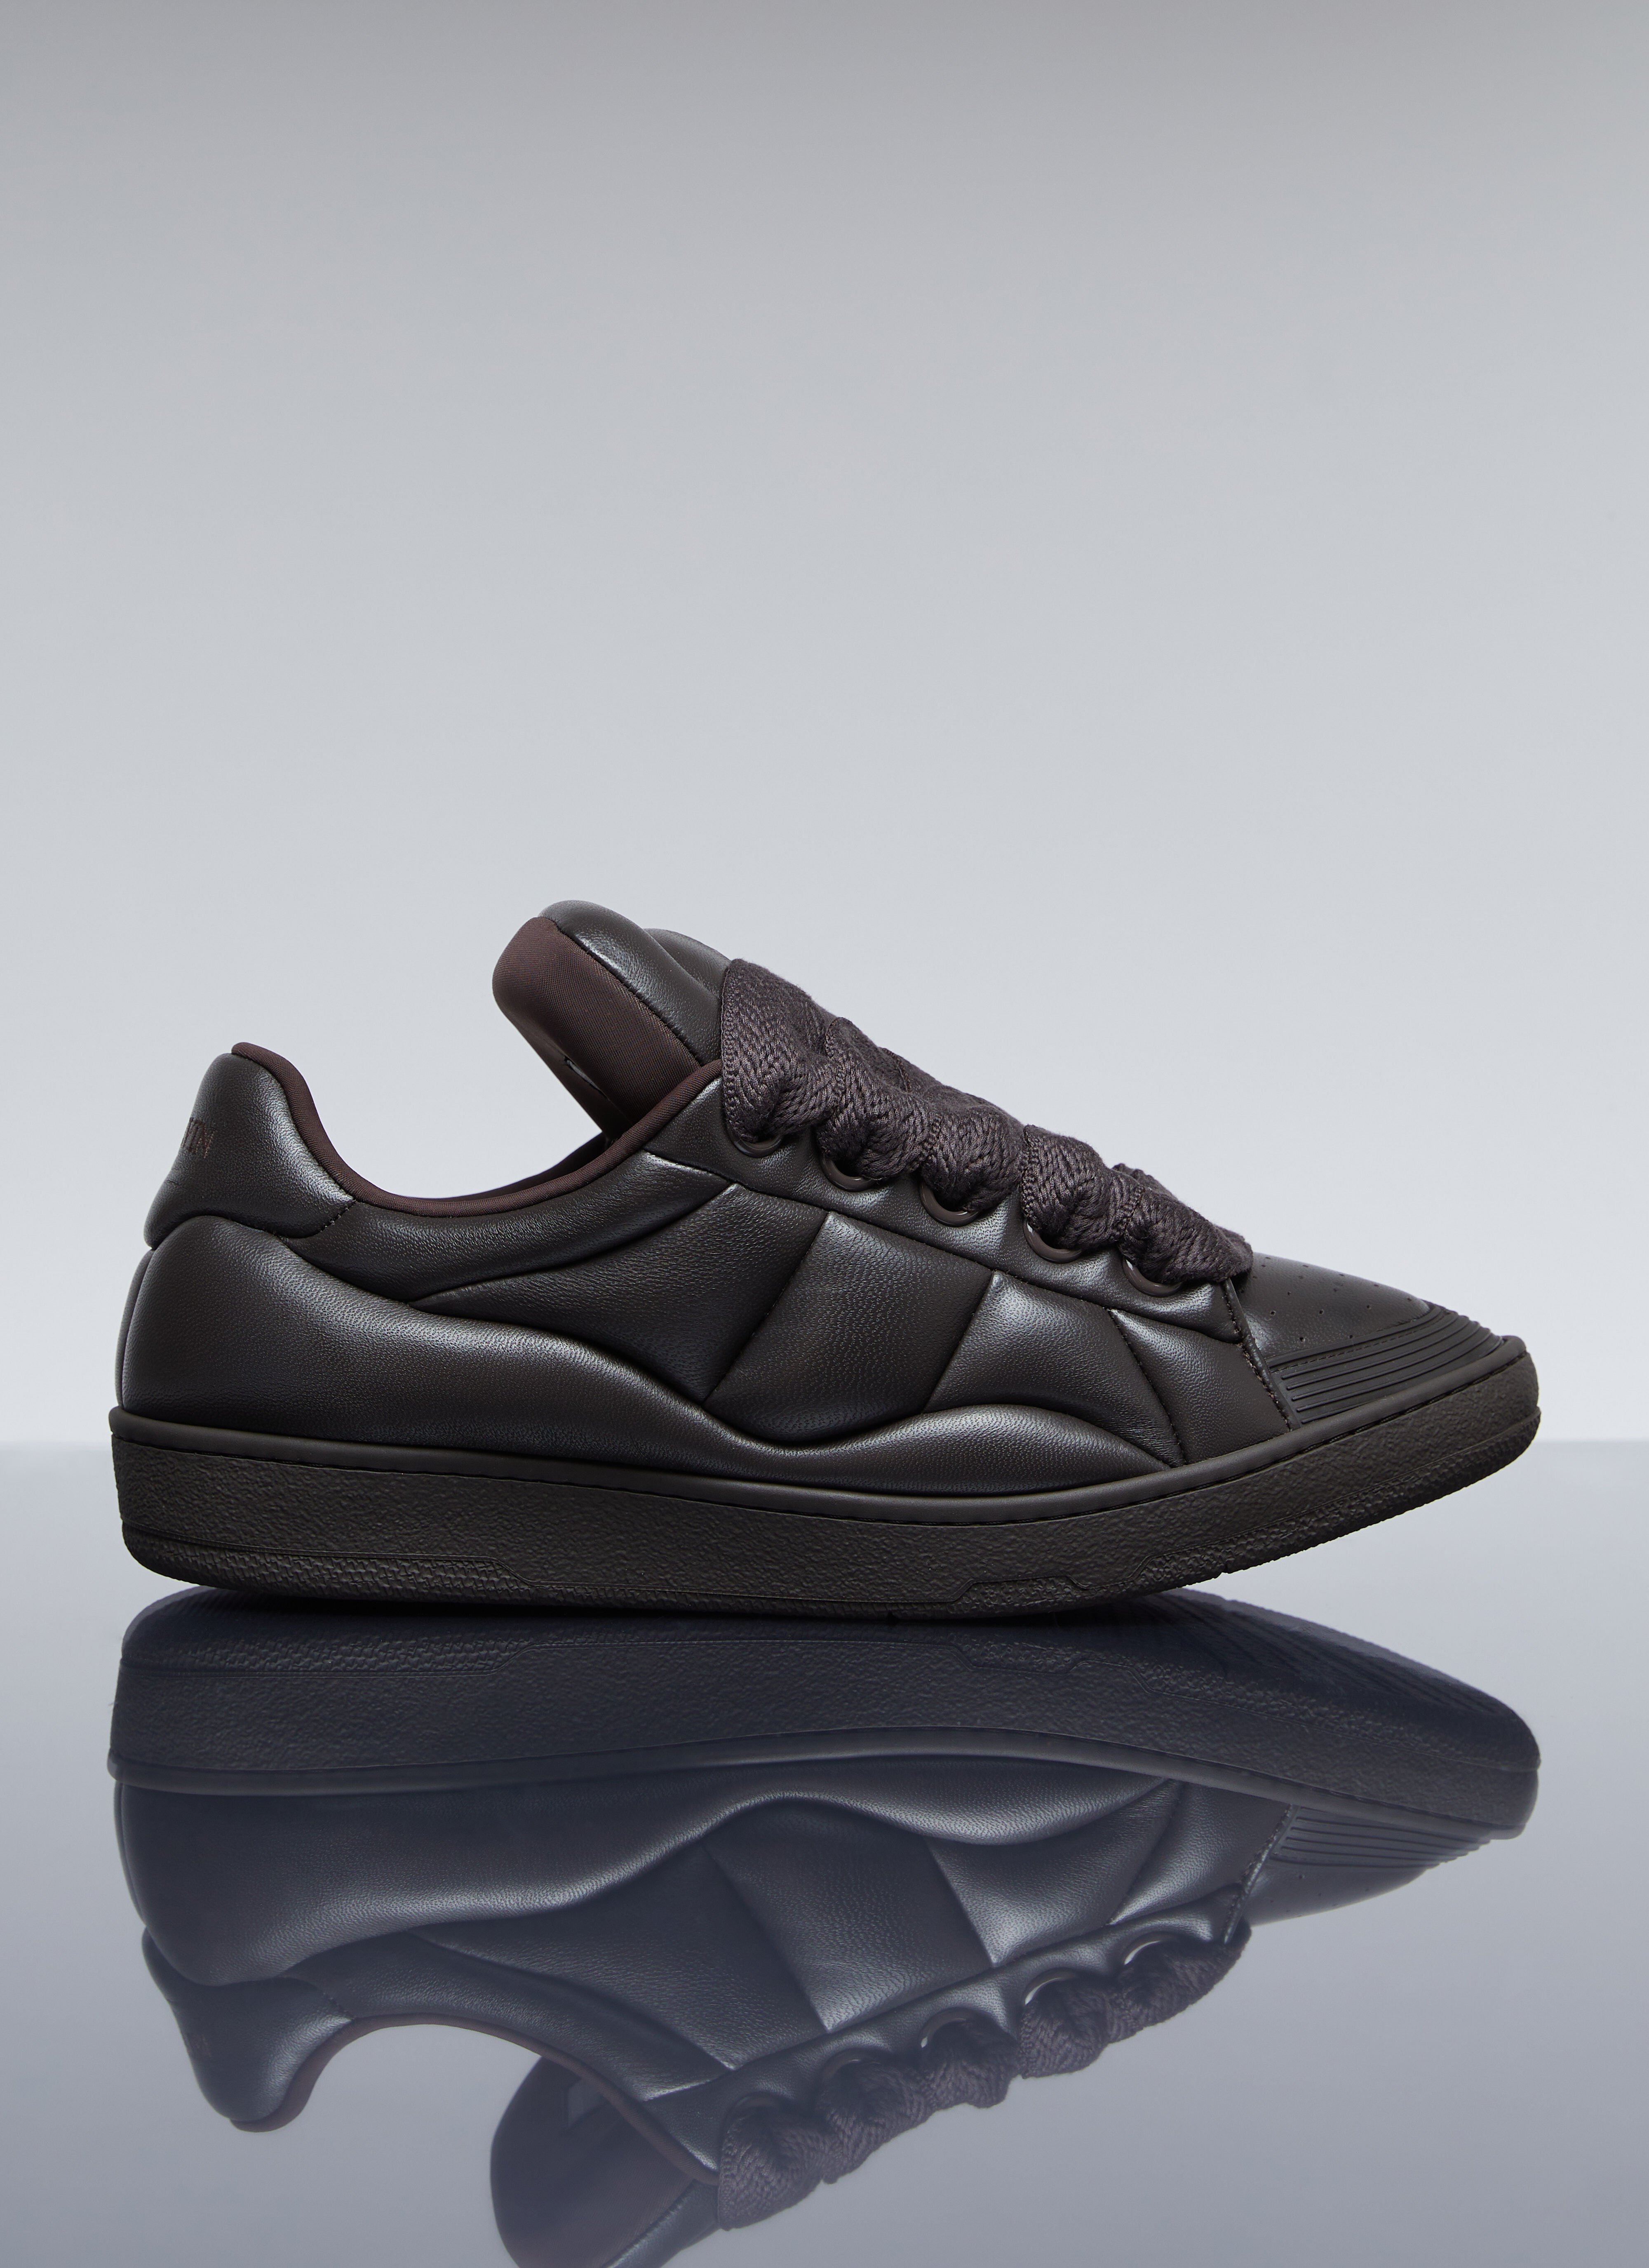 Lanvin Curb XL Low Top Sneakers Brown lnv0153013